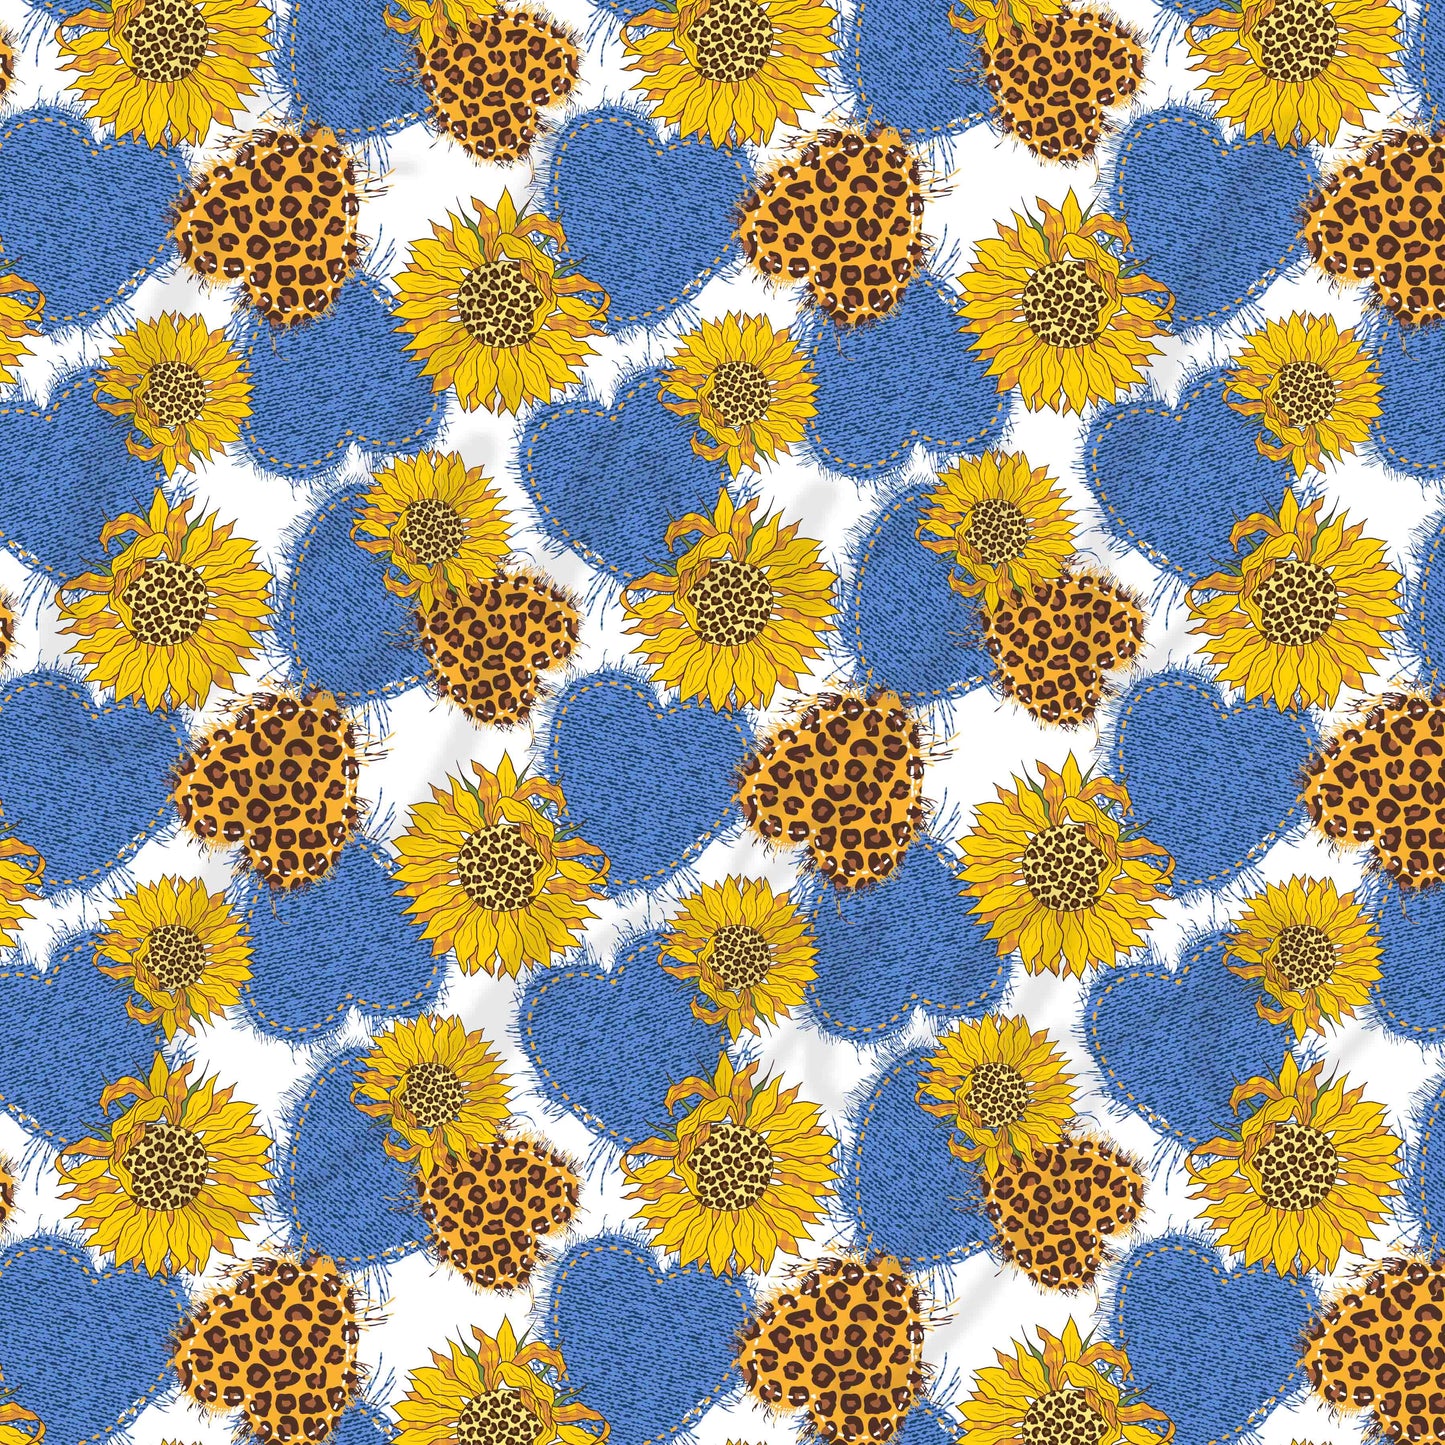 Sunflower Denim Leopard Patches Adhesive Vinyl